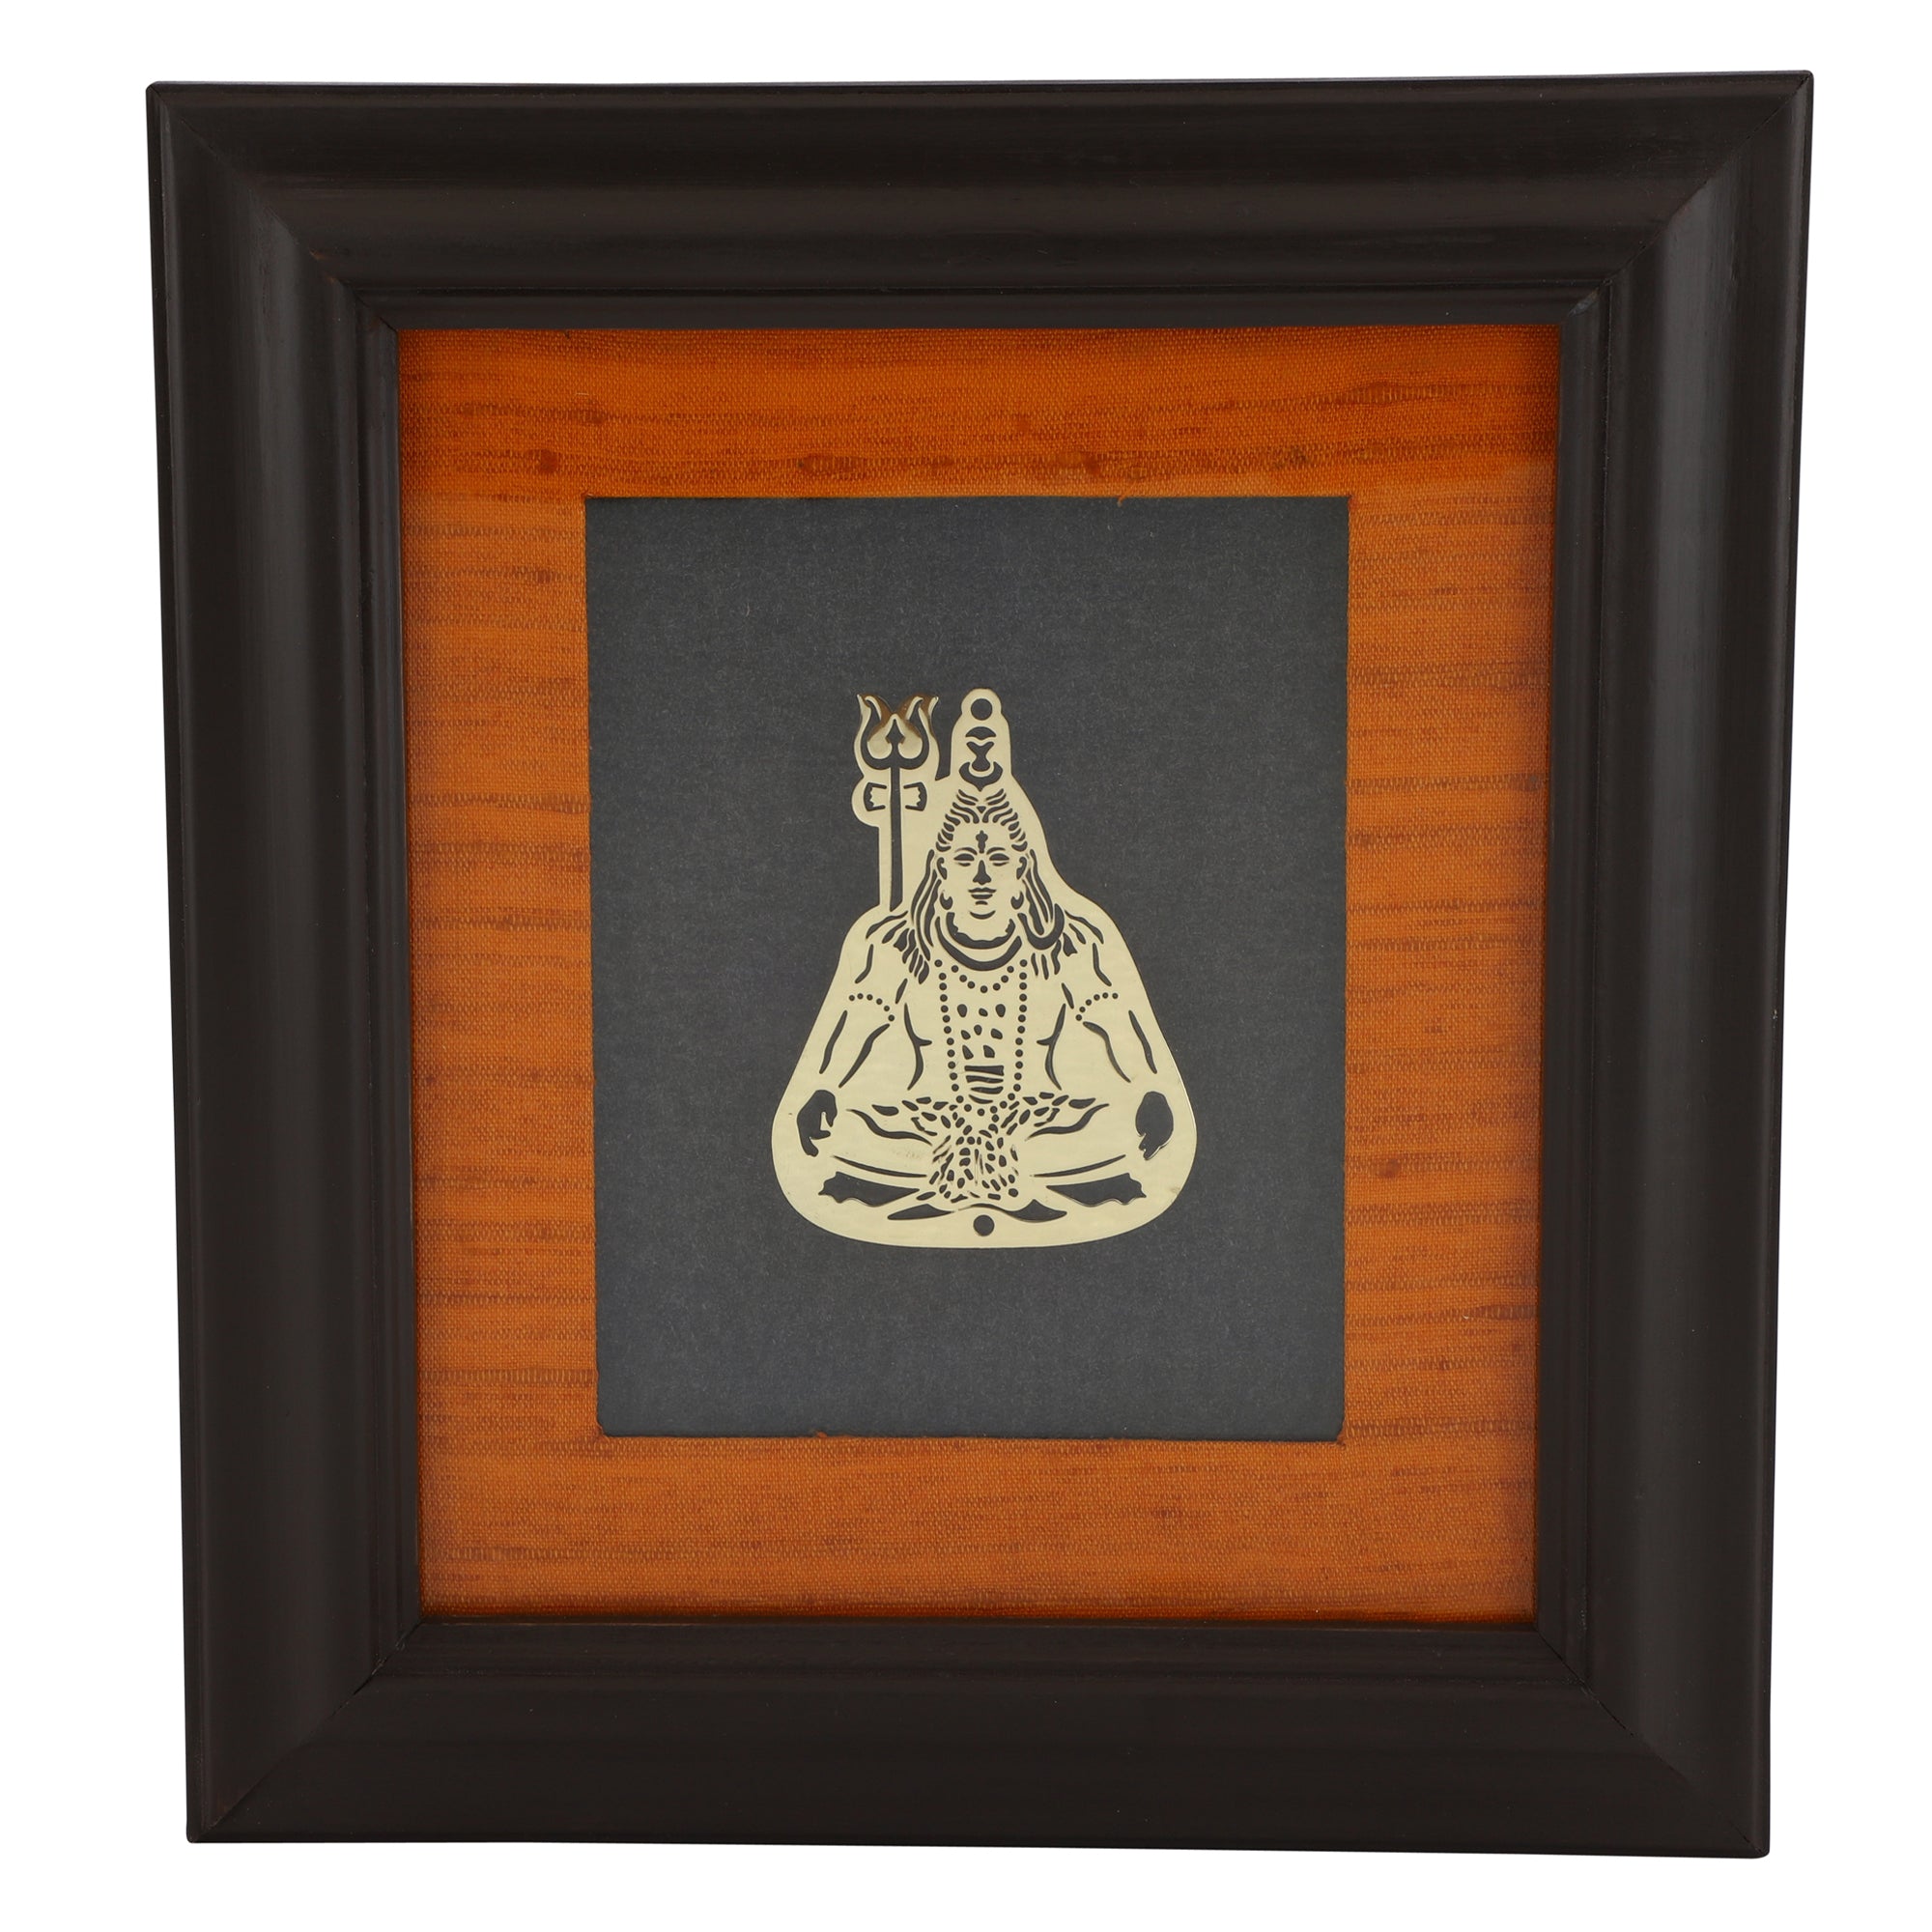 Adoraa's Shivji/Shiva framed brass metal wall art décor